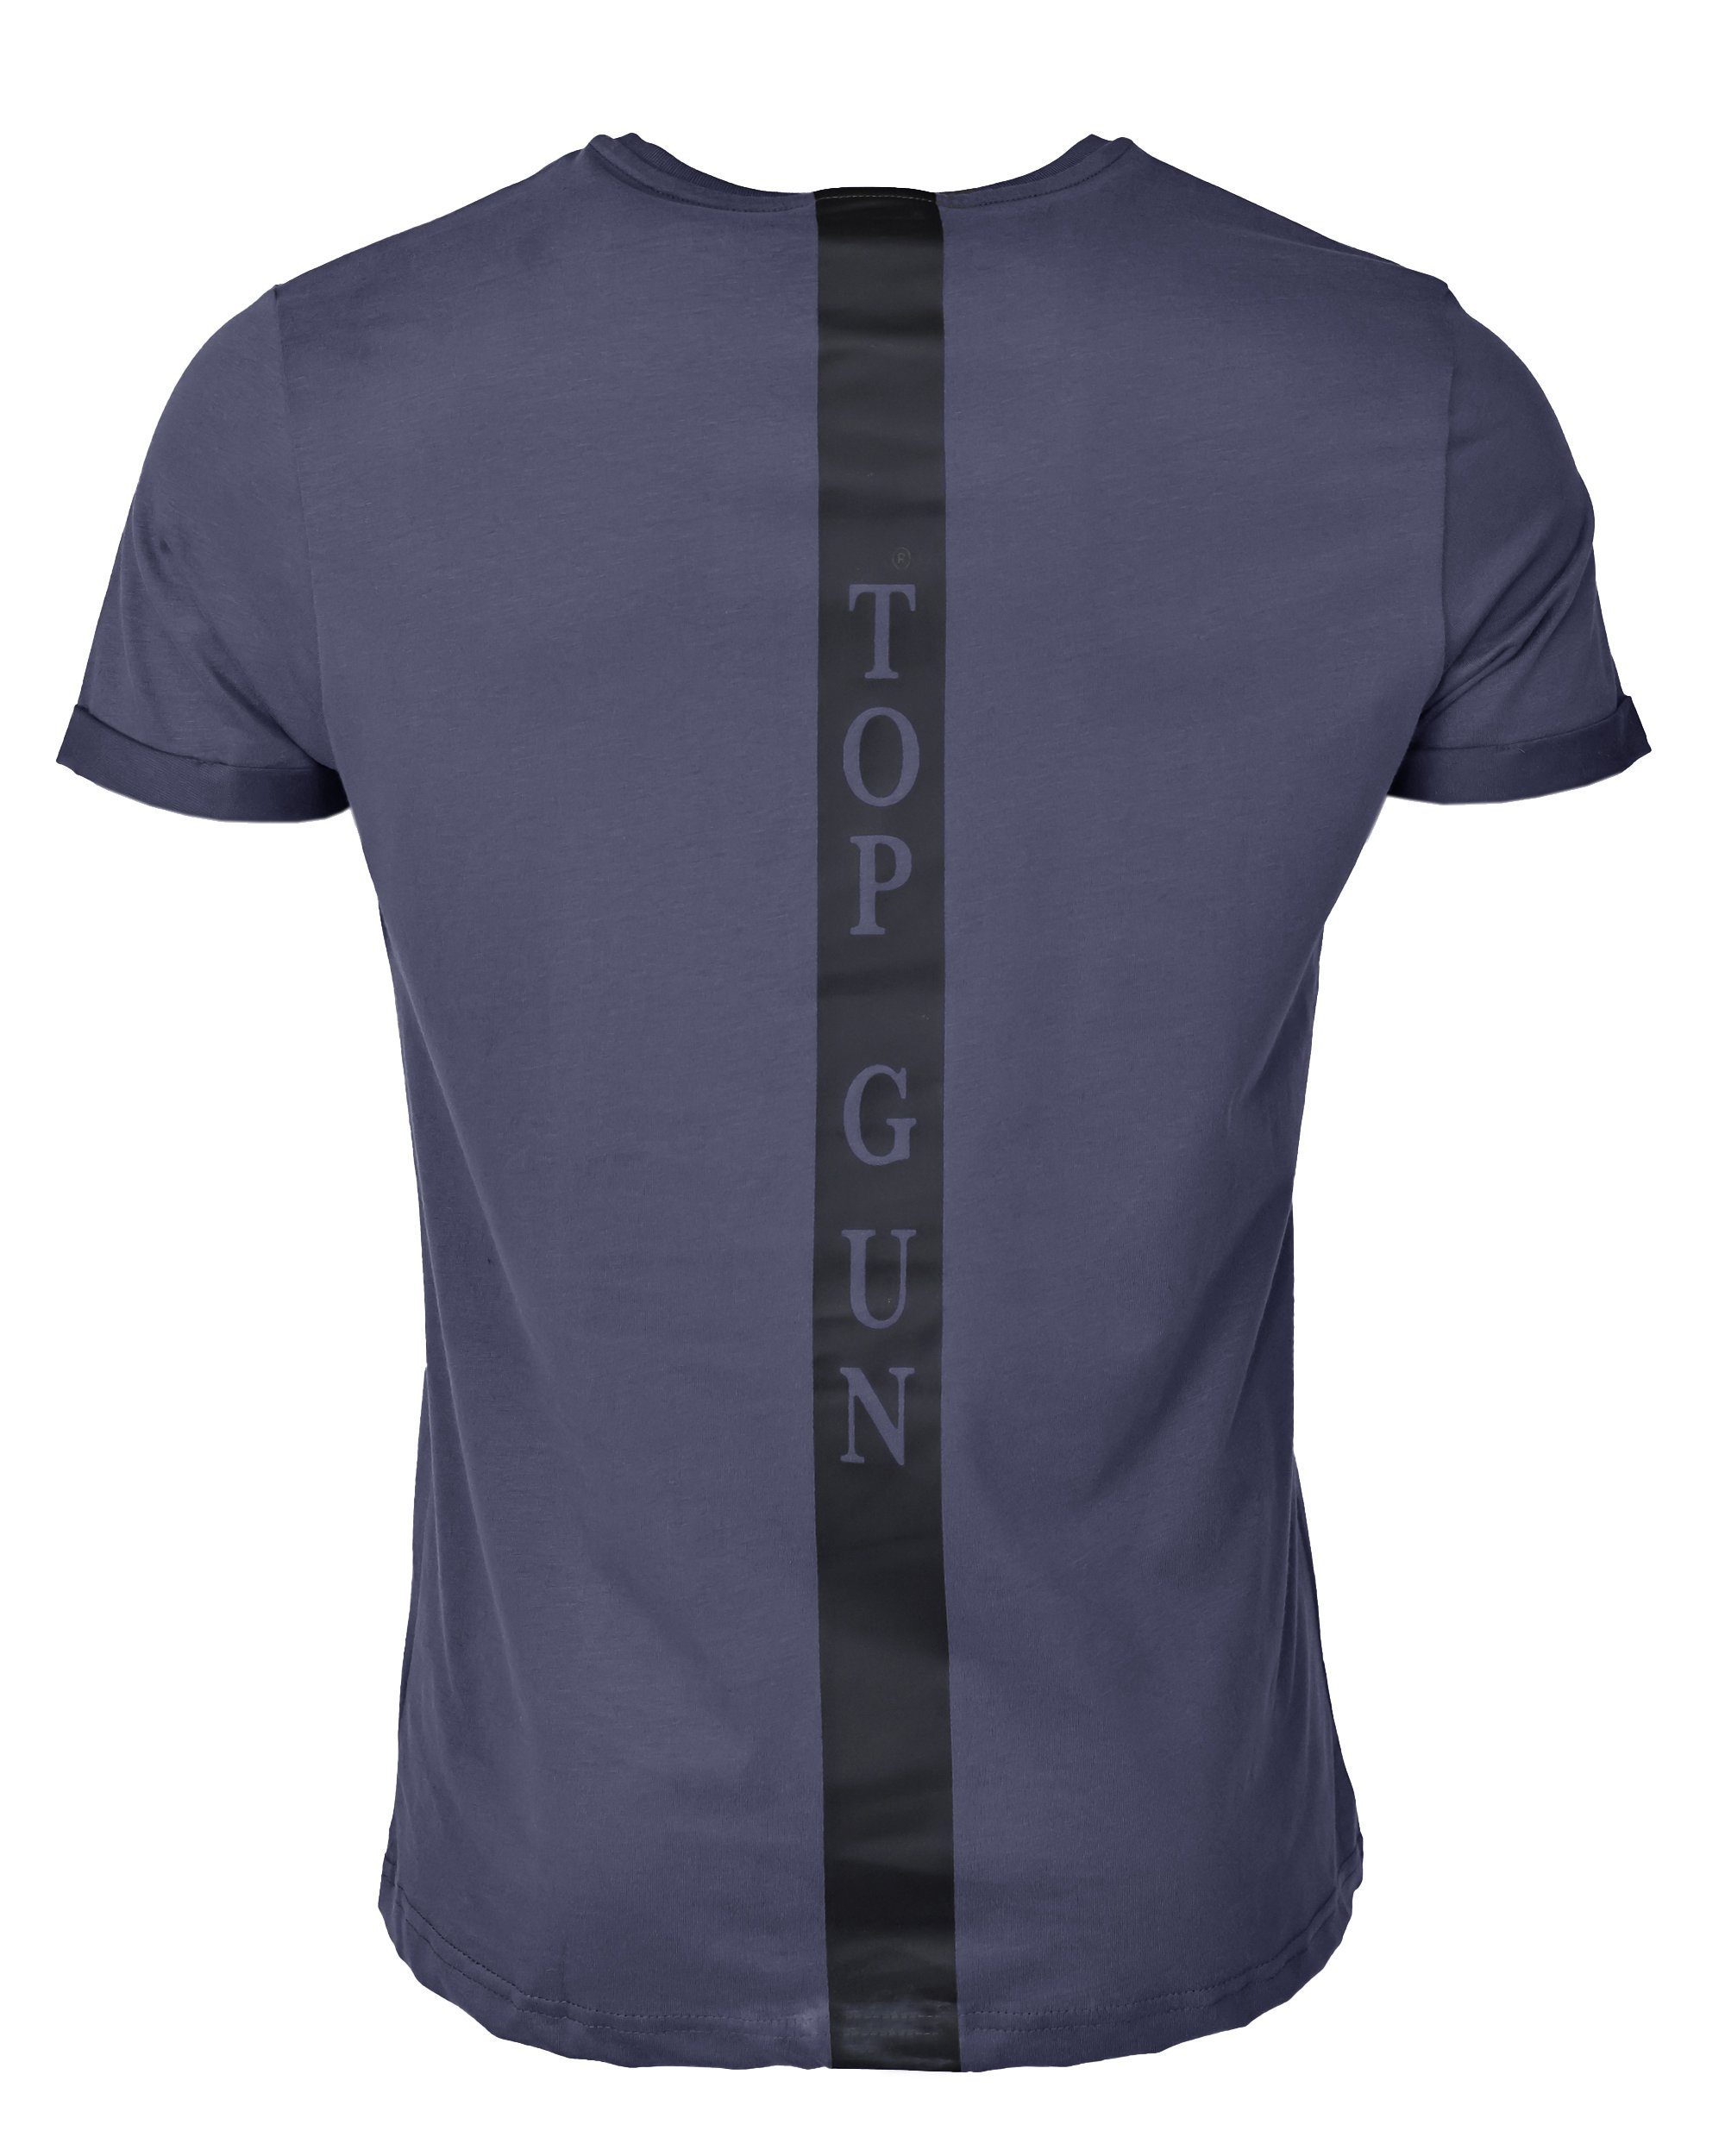 GUN navy TOP TG20213011 T-Shirt